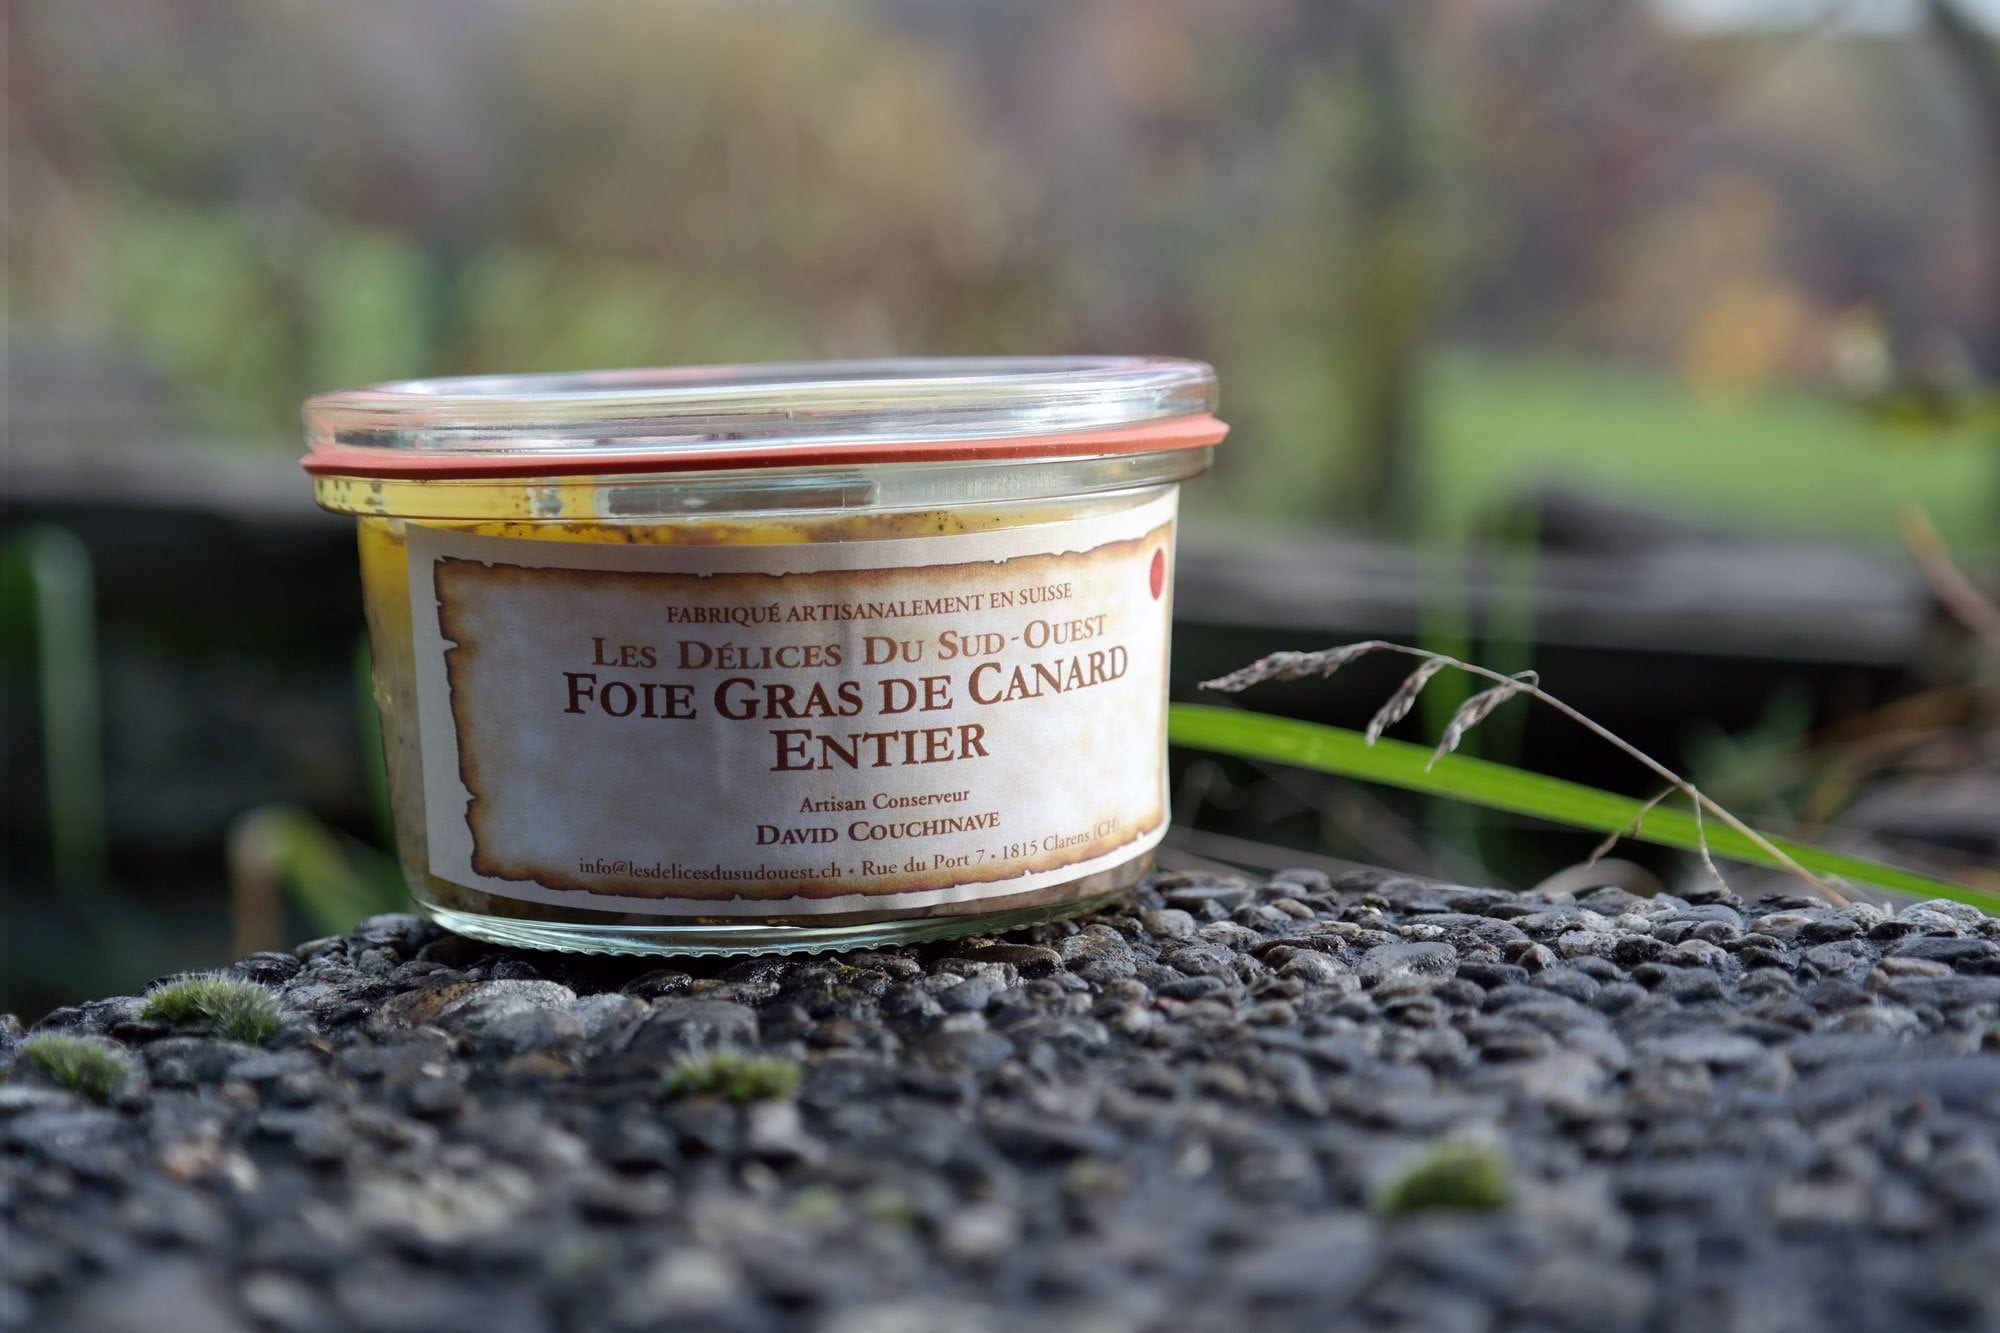 Foie gras de canard artisanal entier